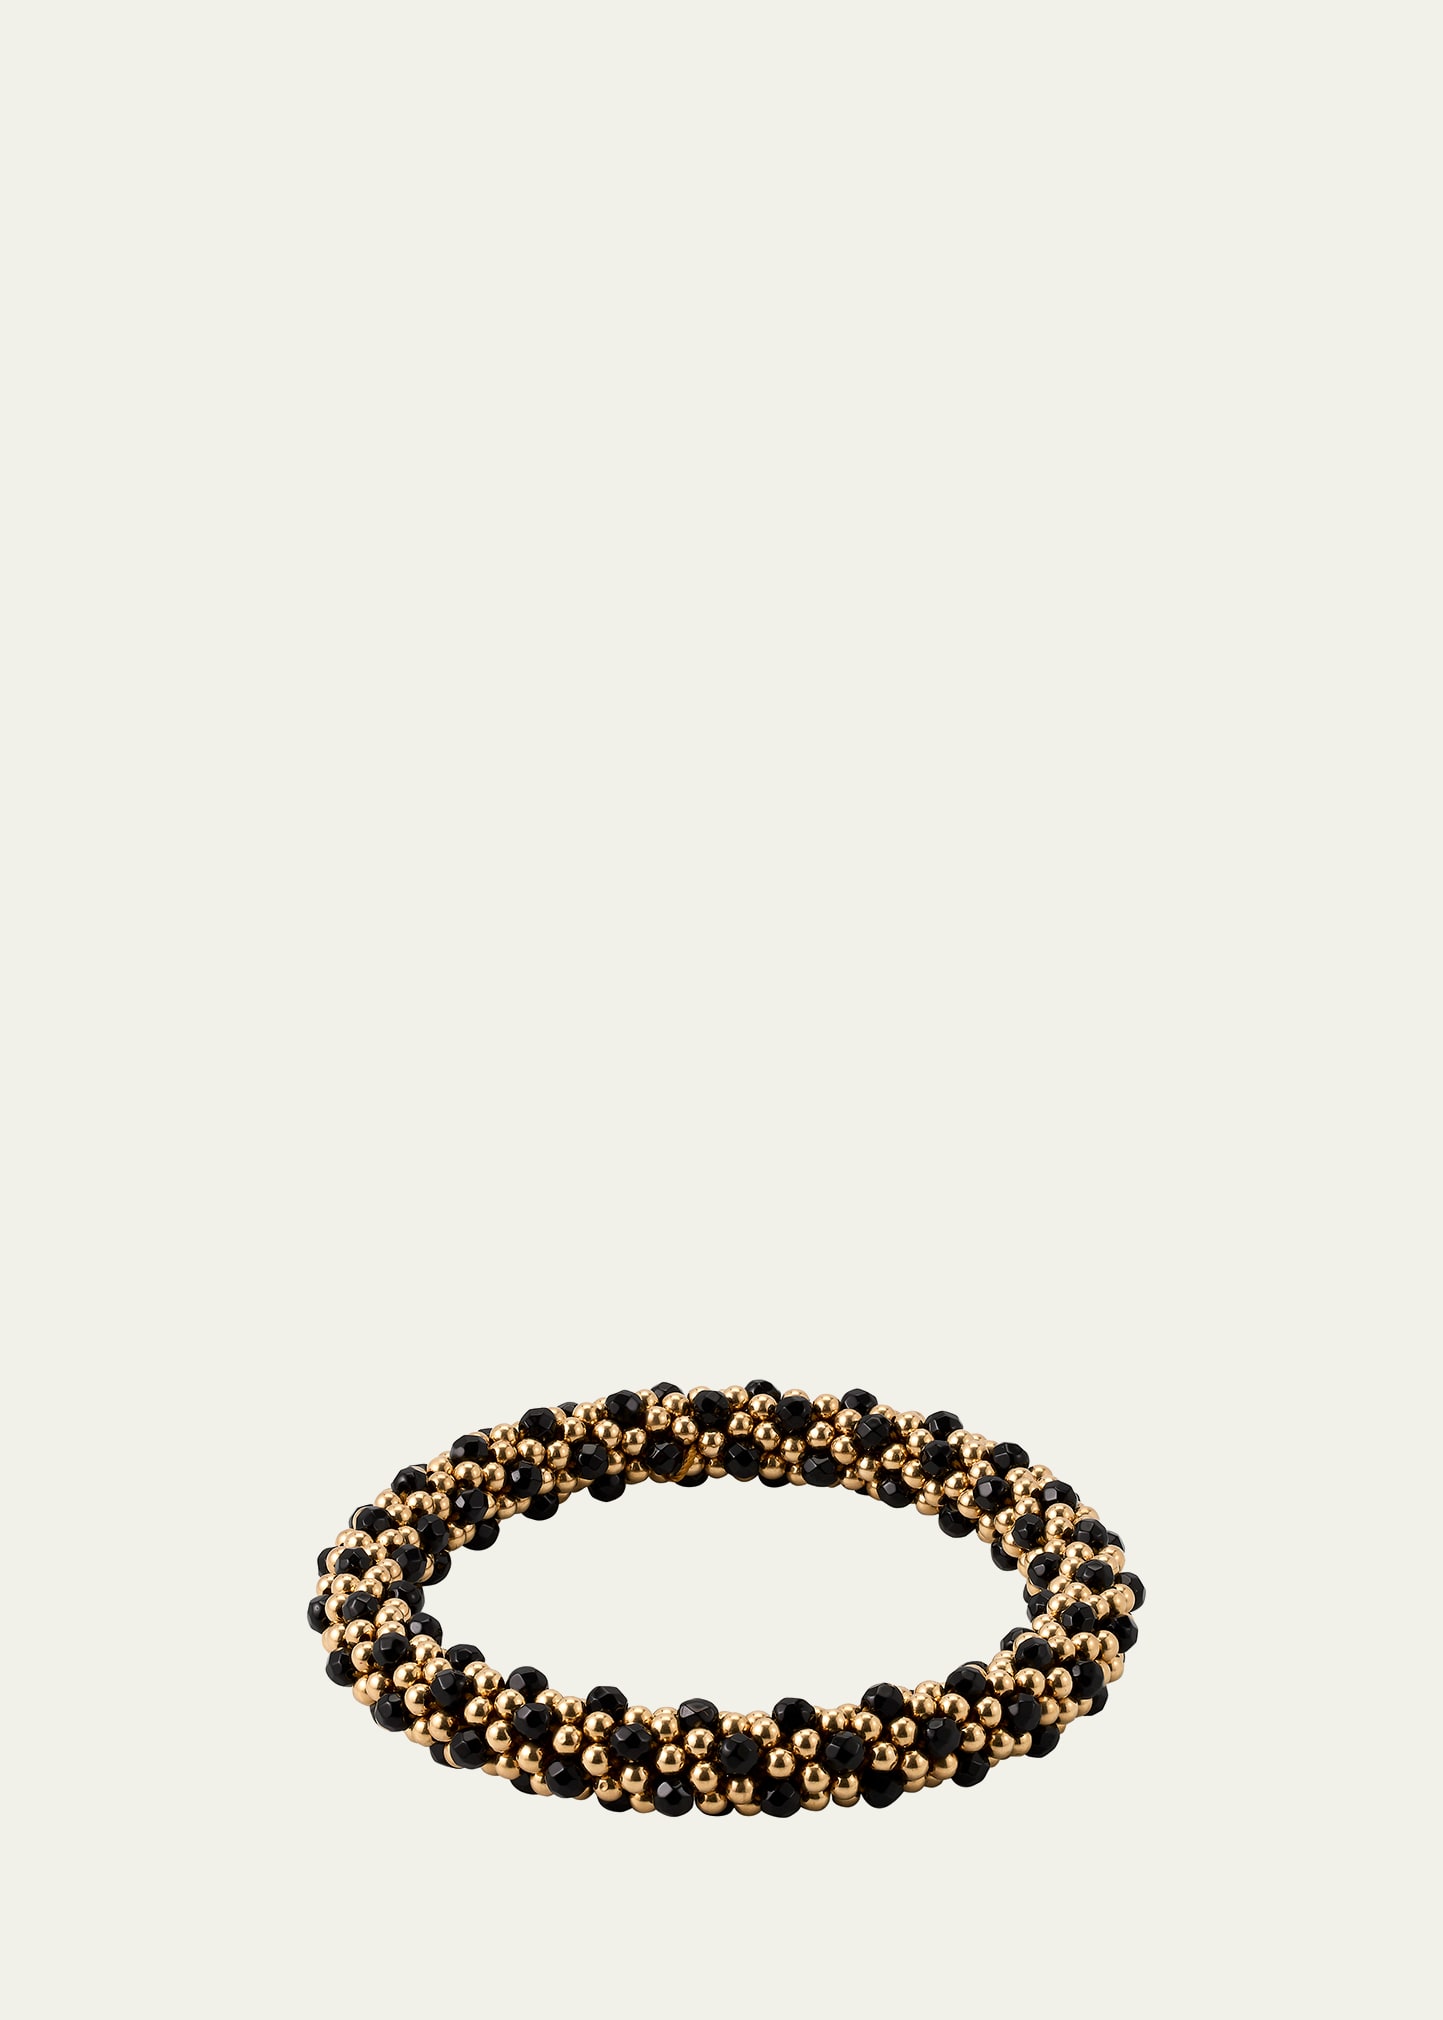 14k Gold and Black Onyx Bead Bracelet